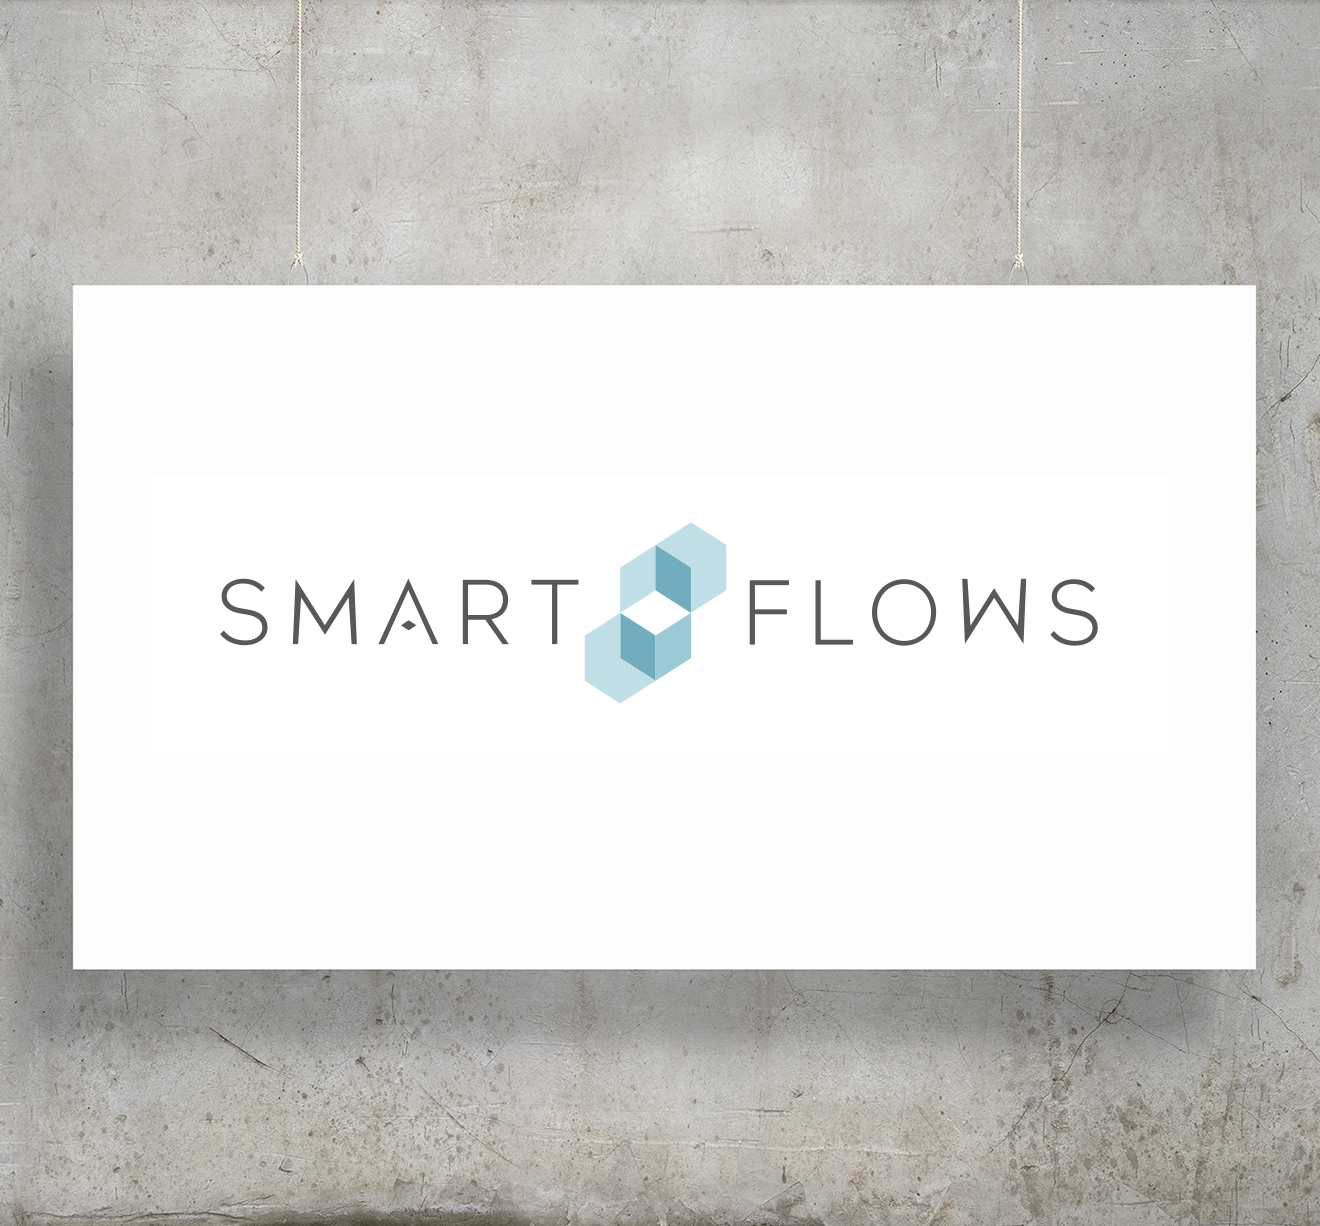 Company Profile Smart Flows